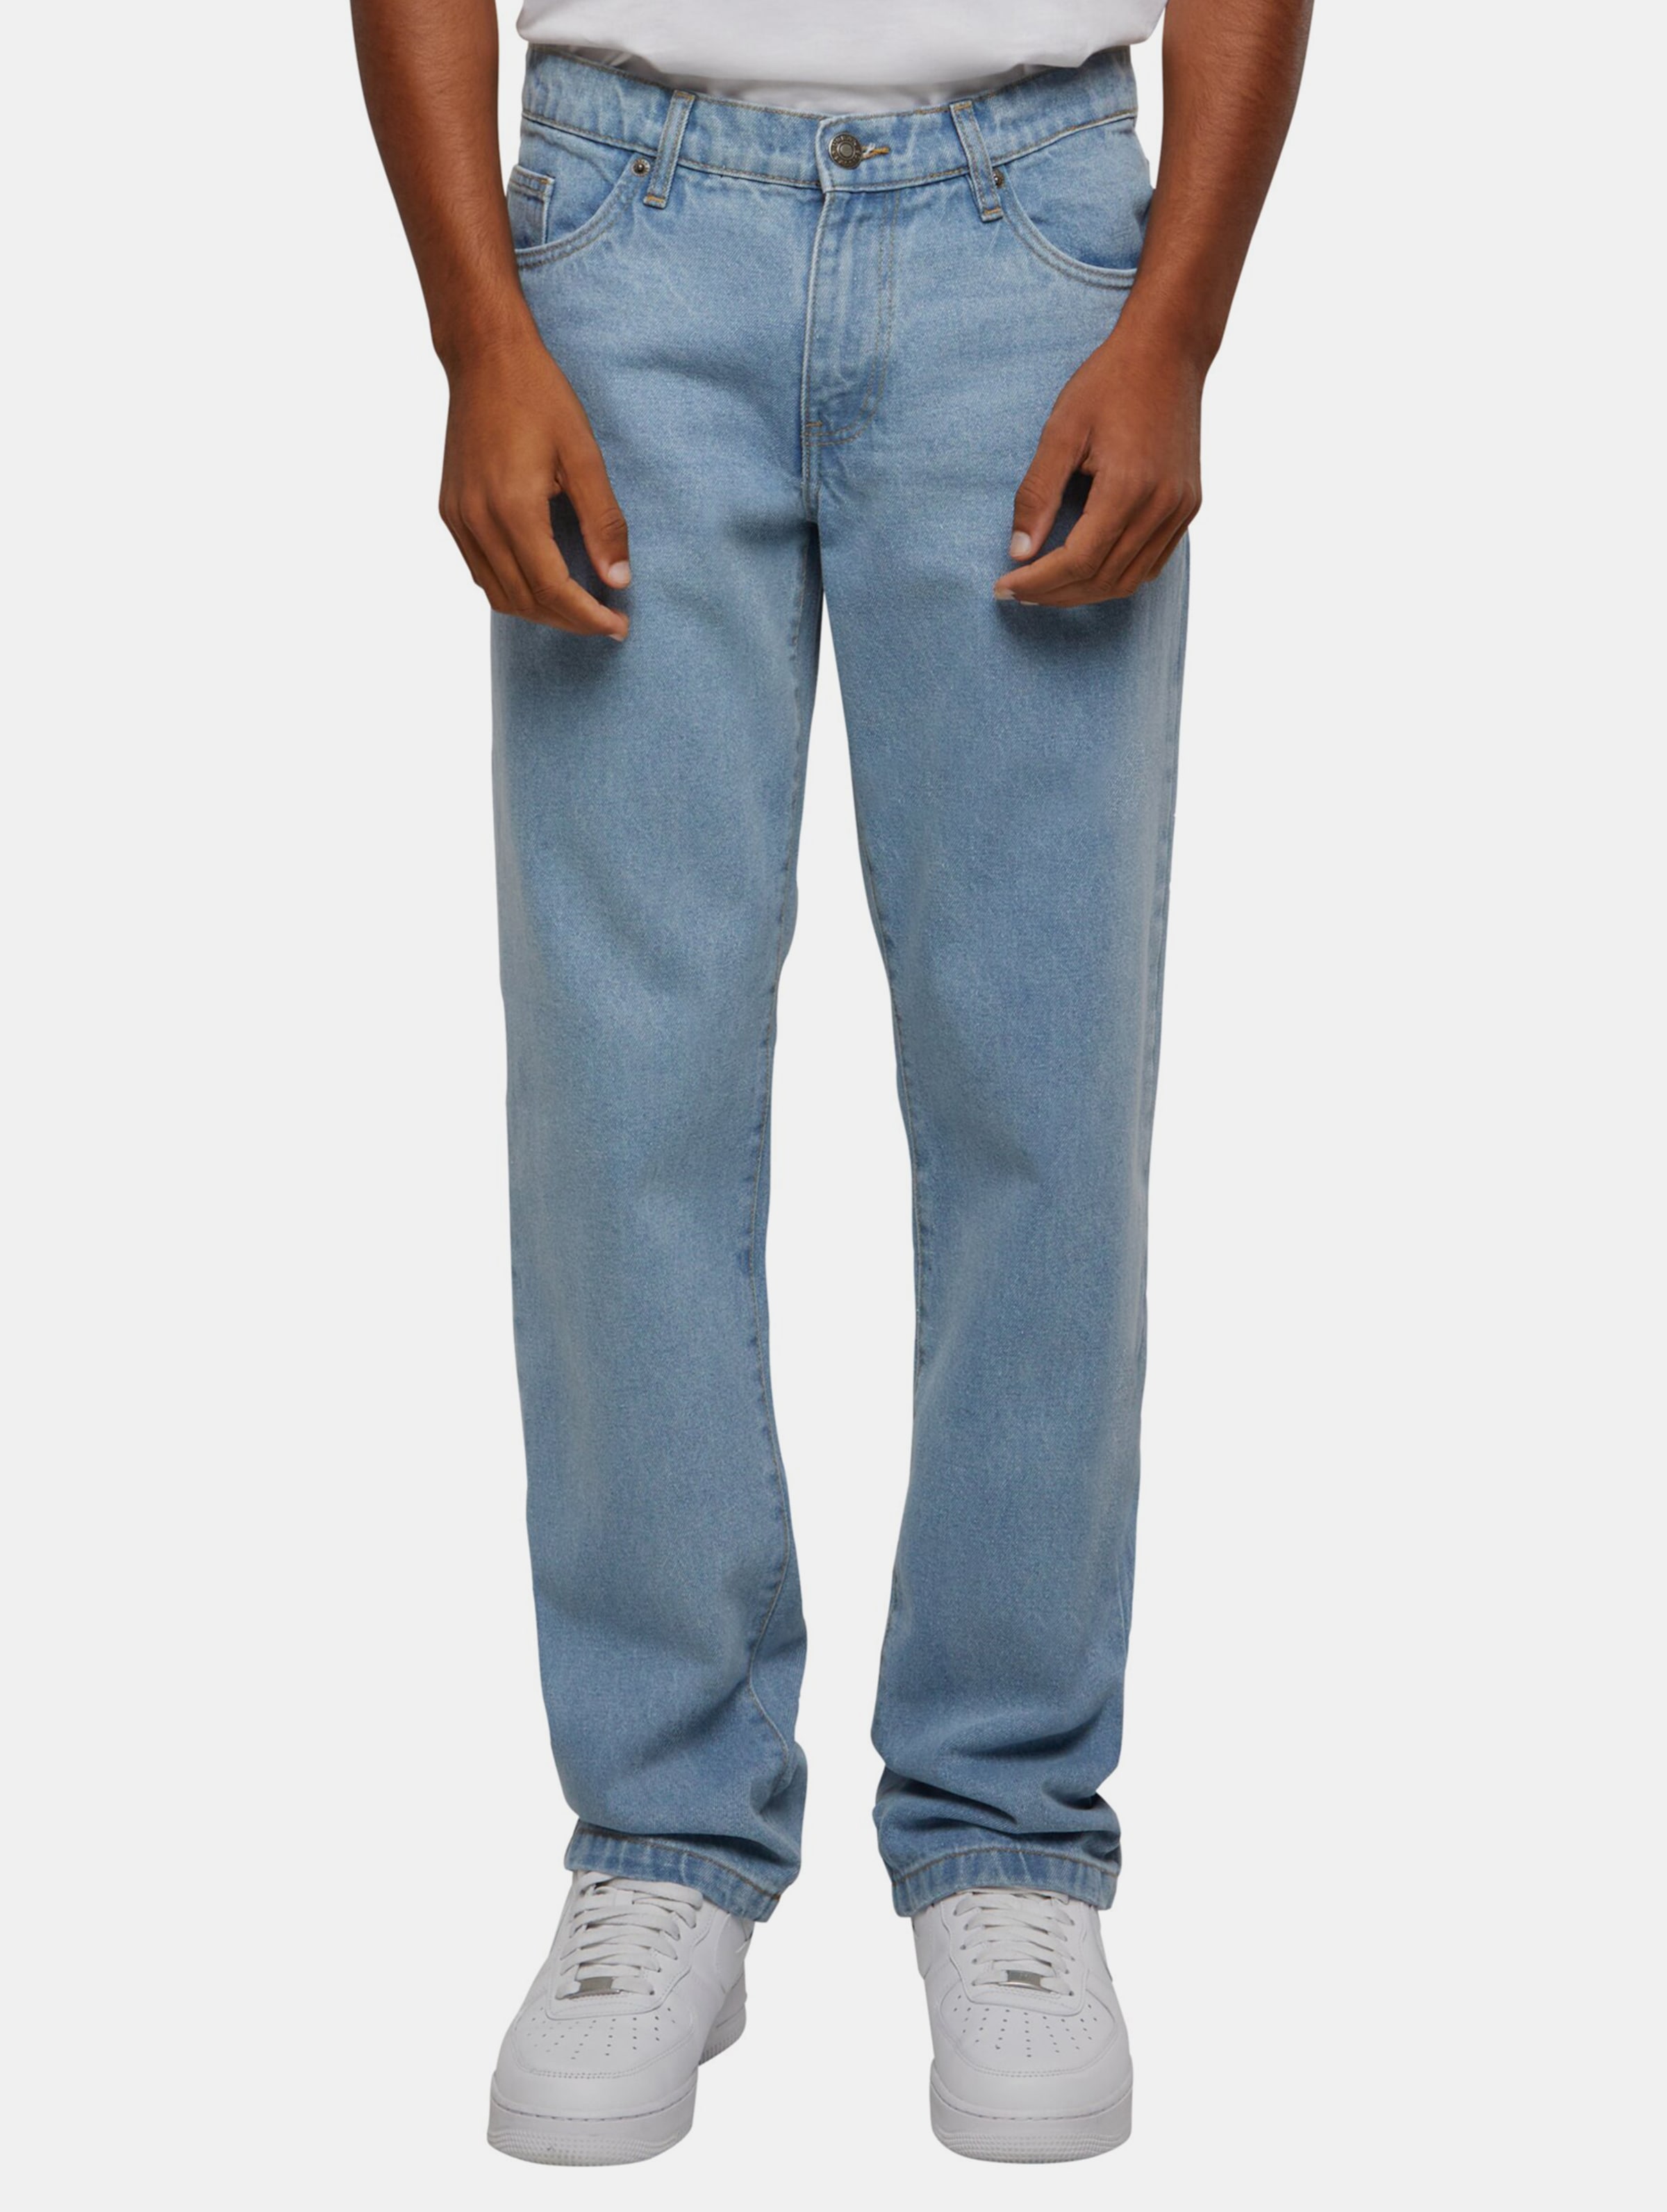 Urban Classics - Heavy Ounce Straight Fit Jeans Broek rechte pijpen - Taille, 33 inch - Blauw